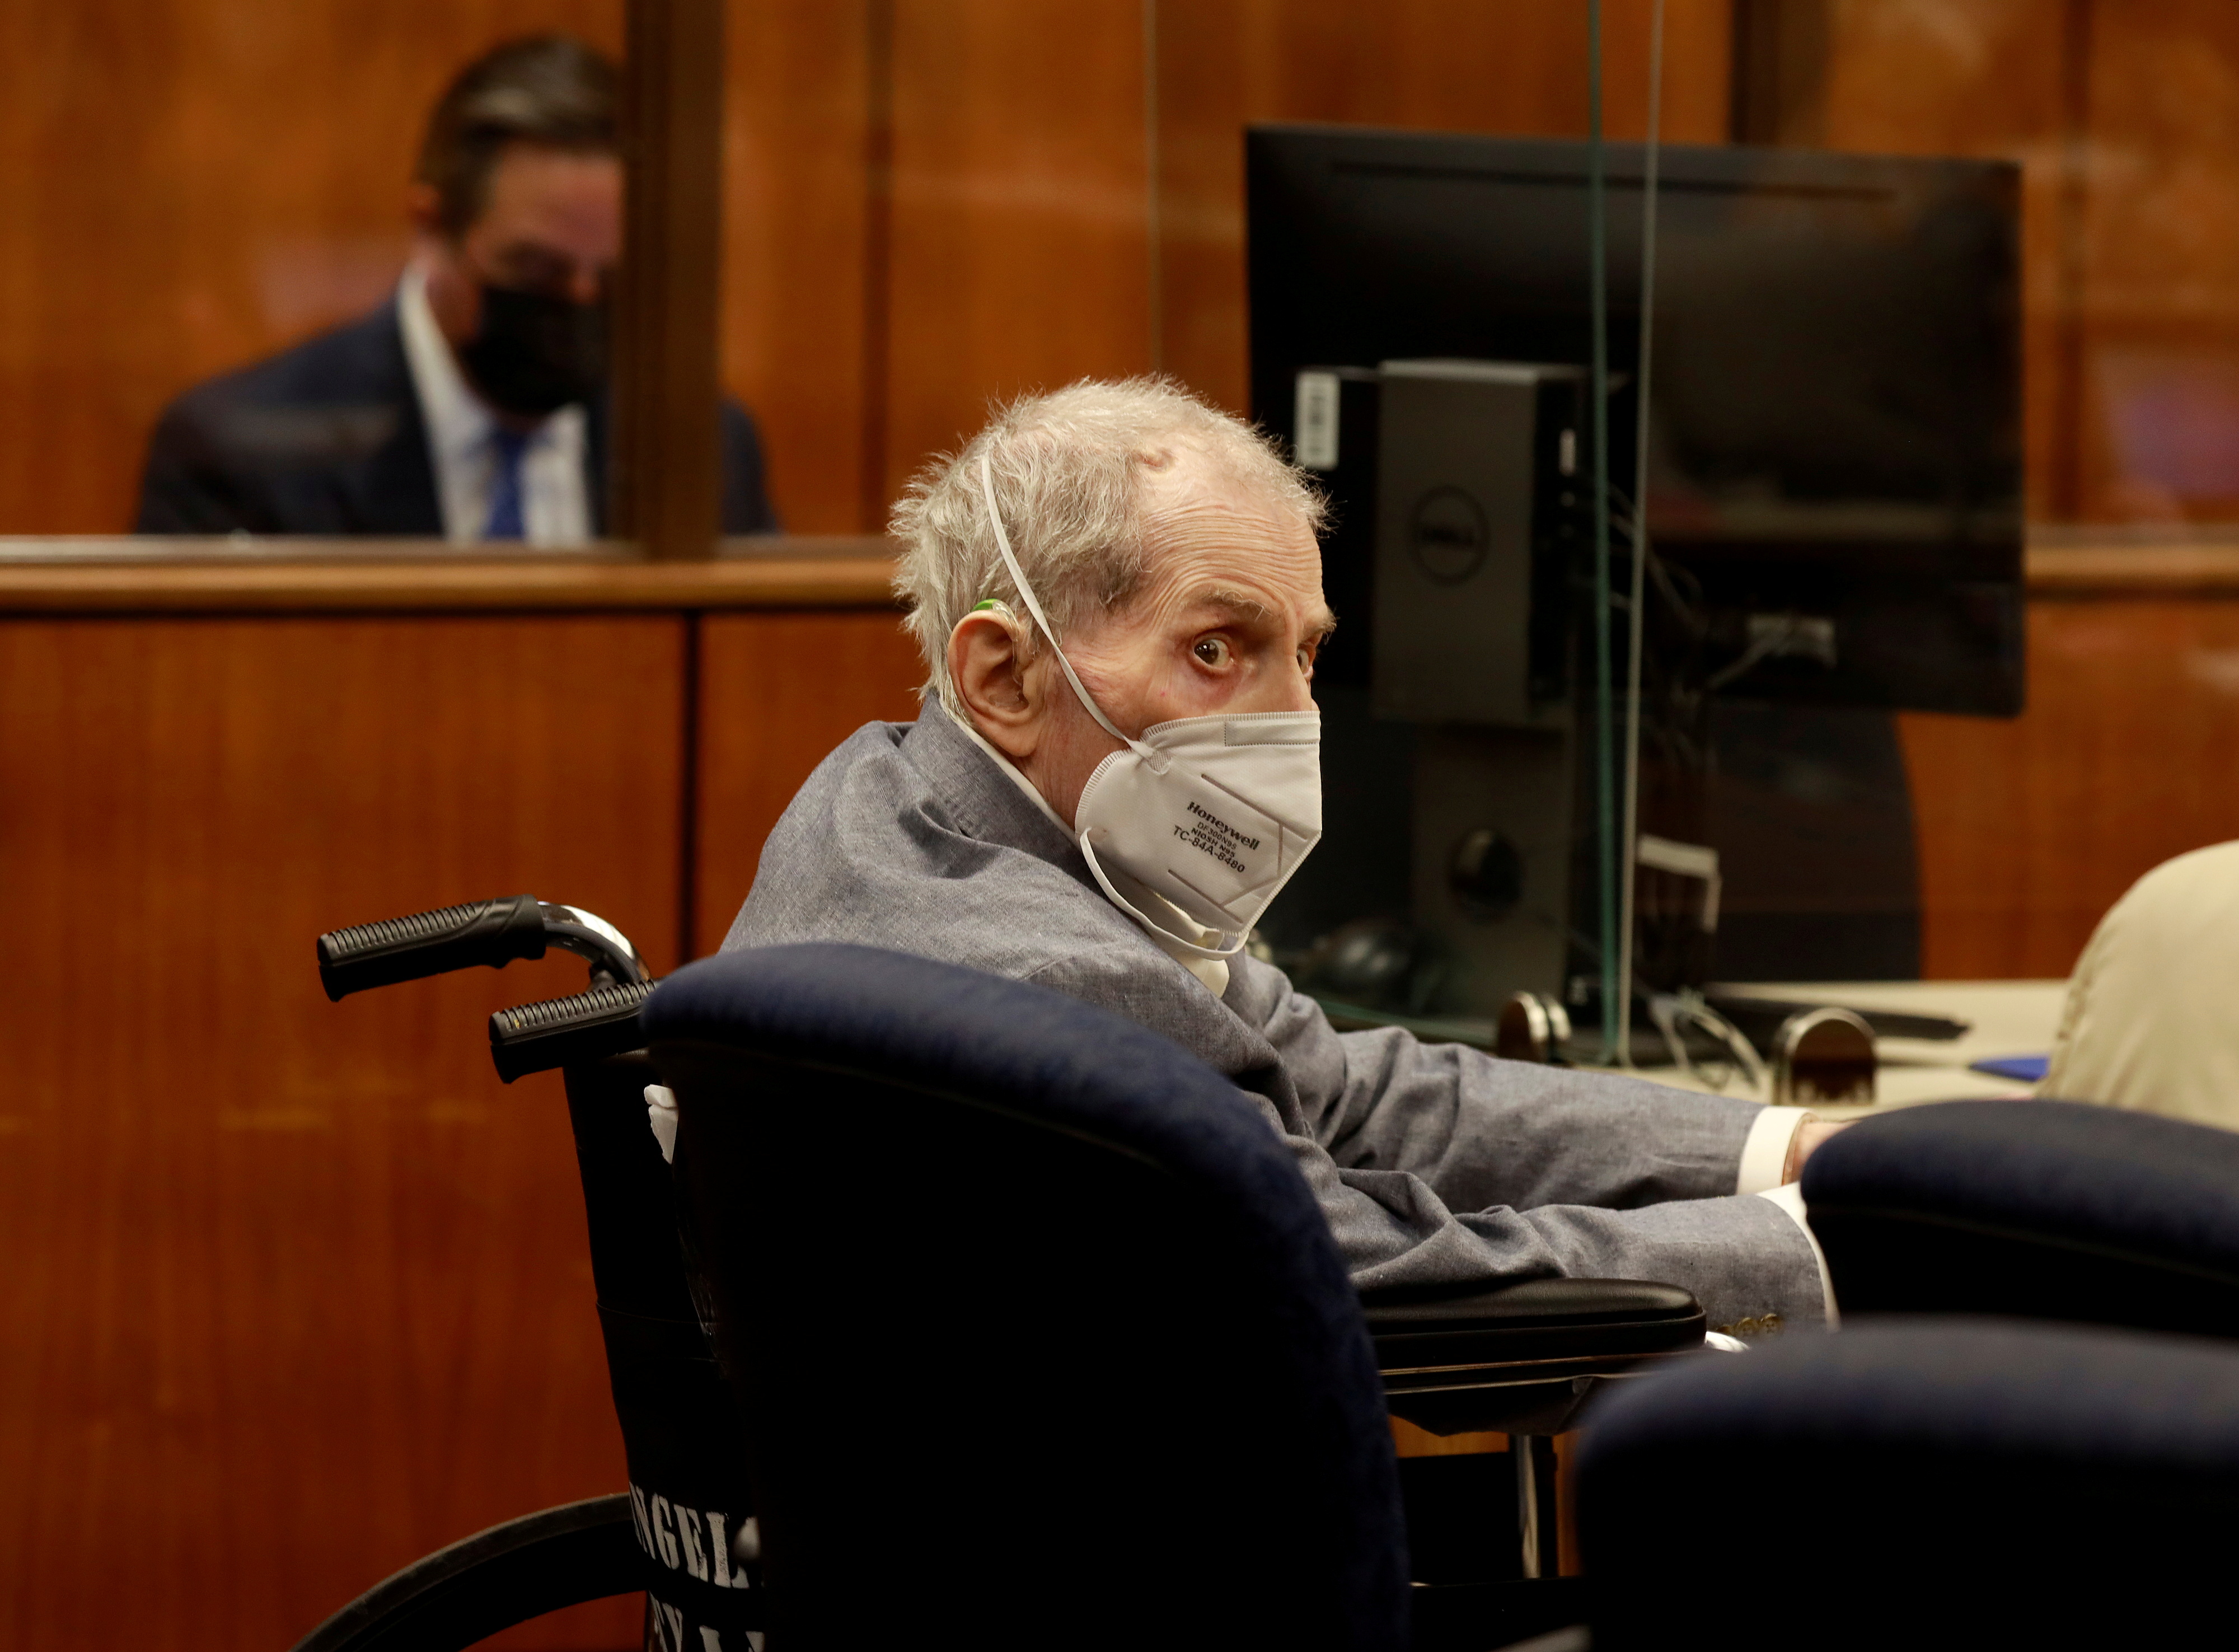 Closing arguments in the Robert Durst murder trial